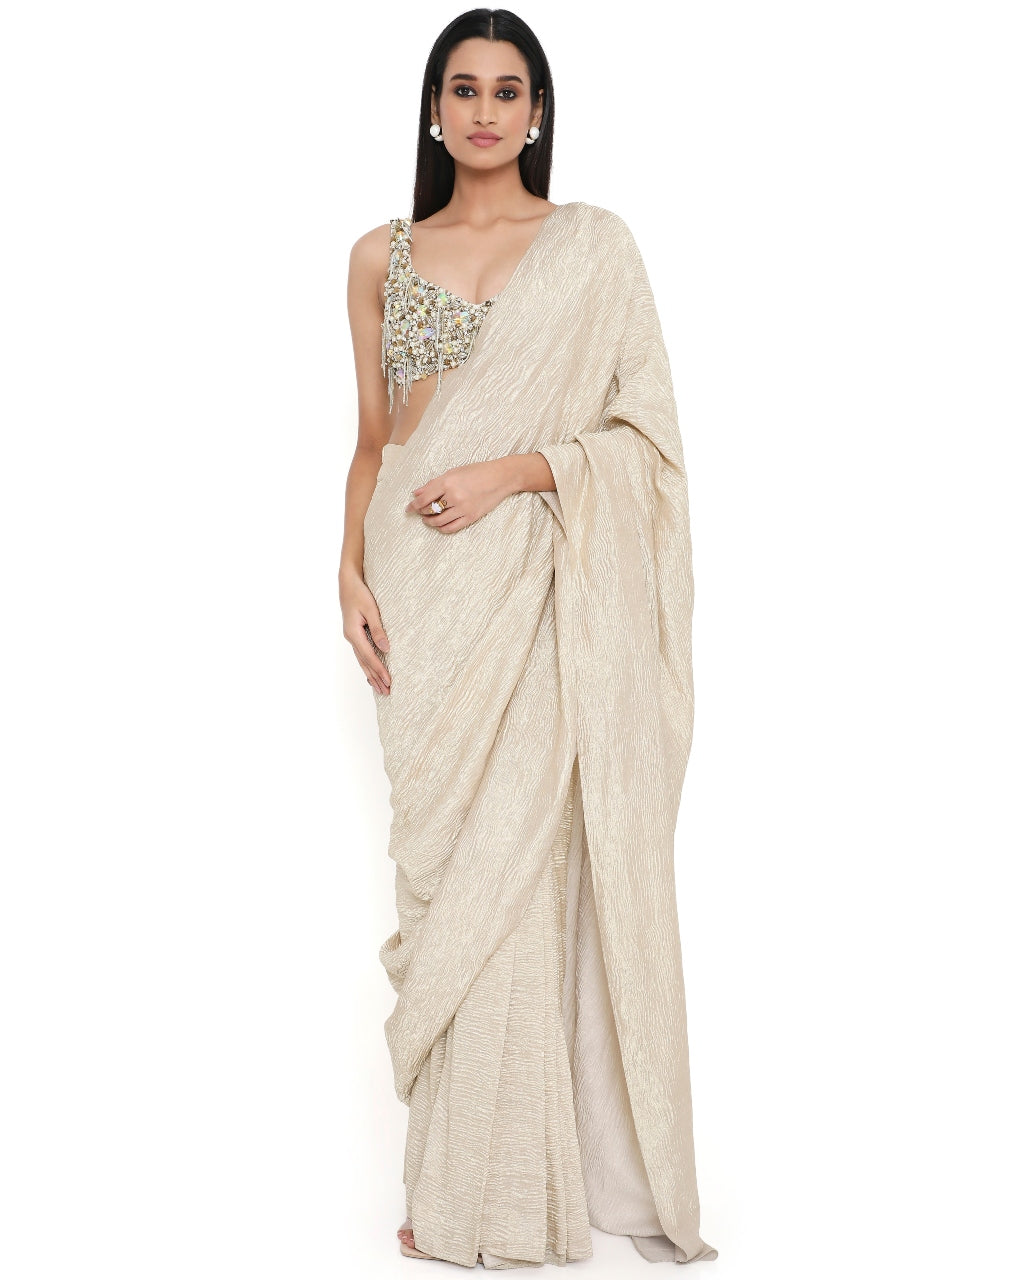 Off White Embroidered Choli With Sari Set